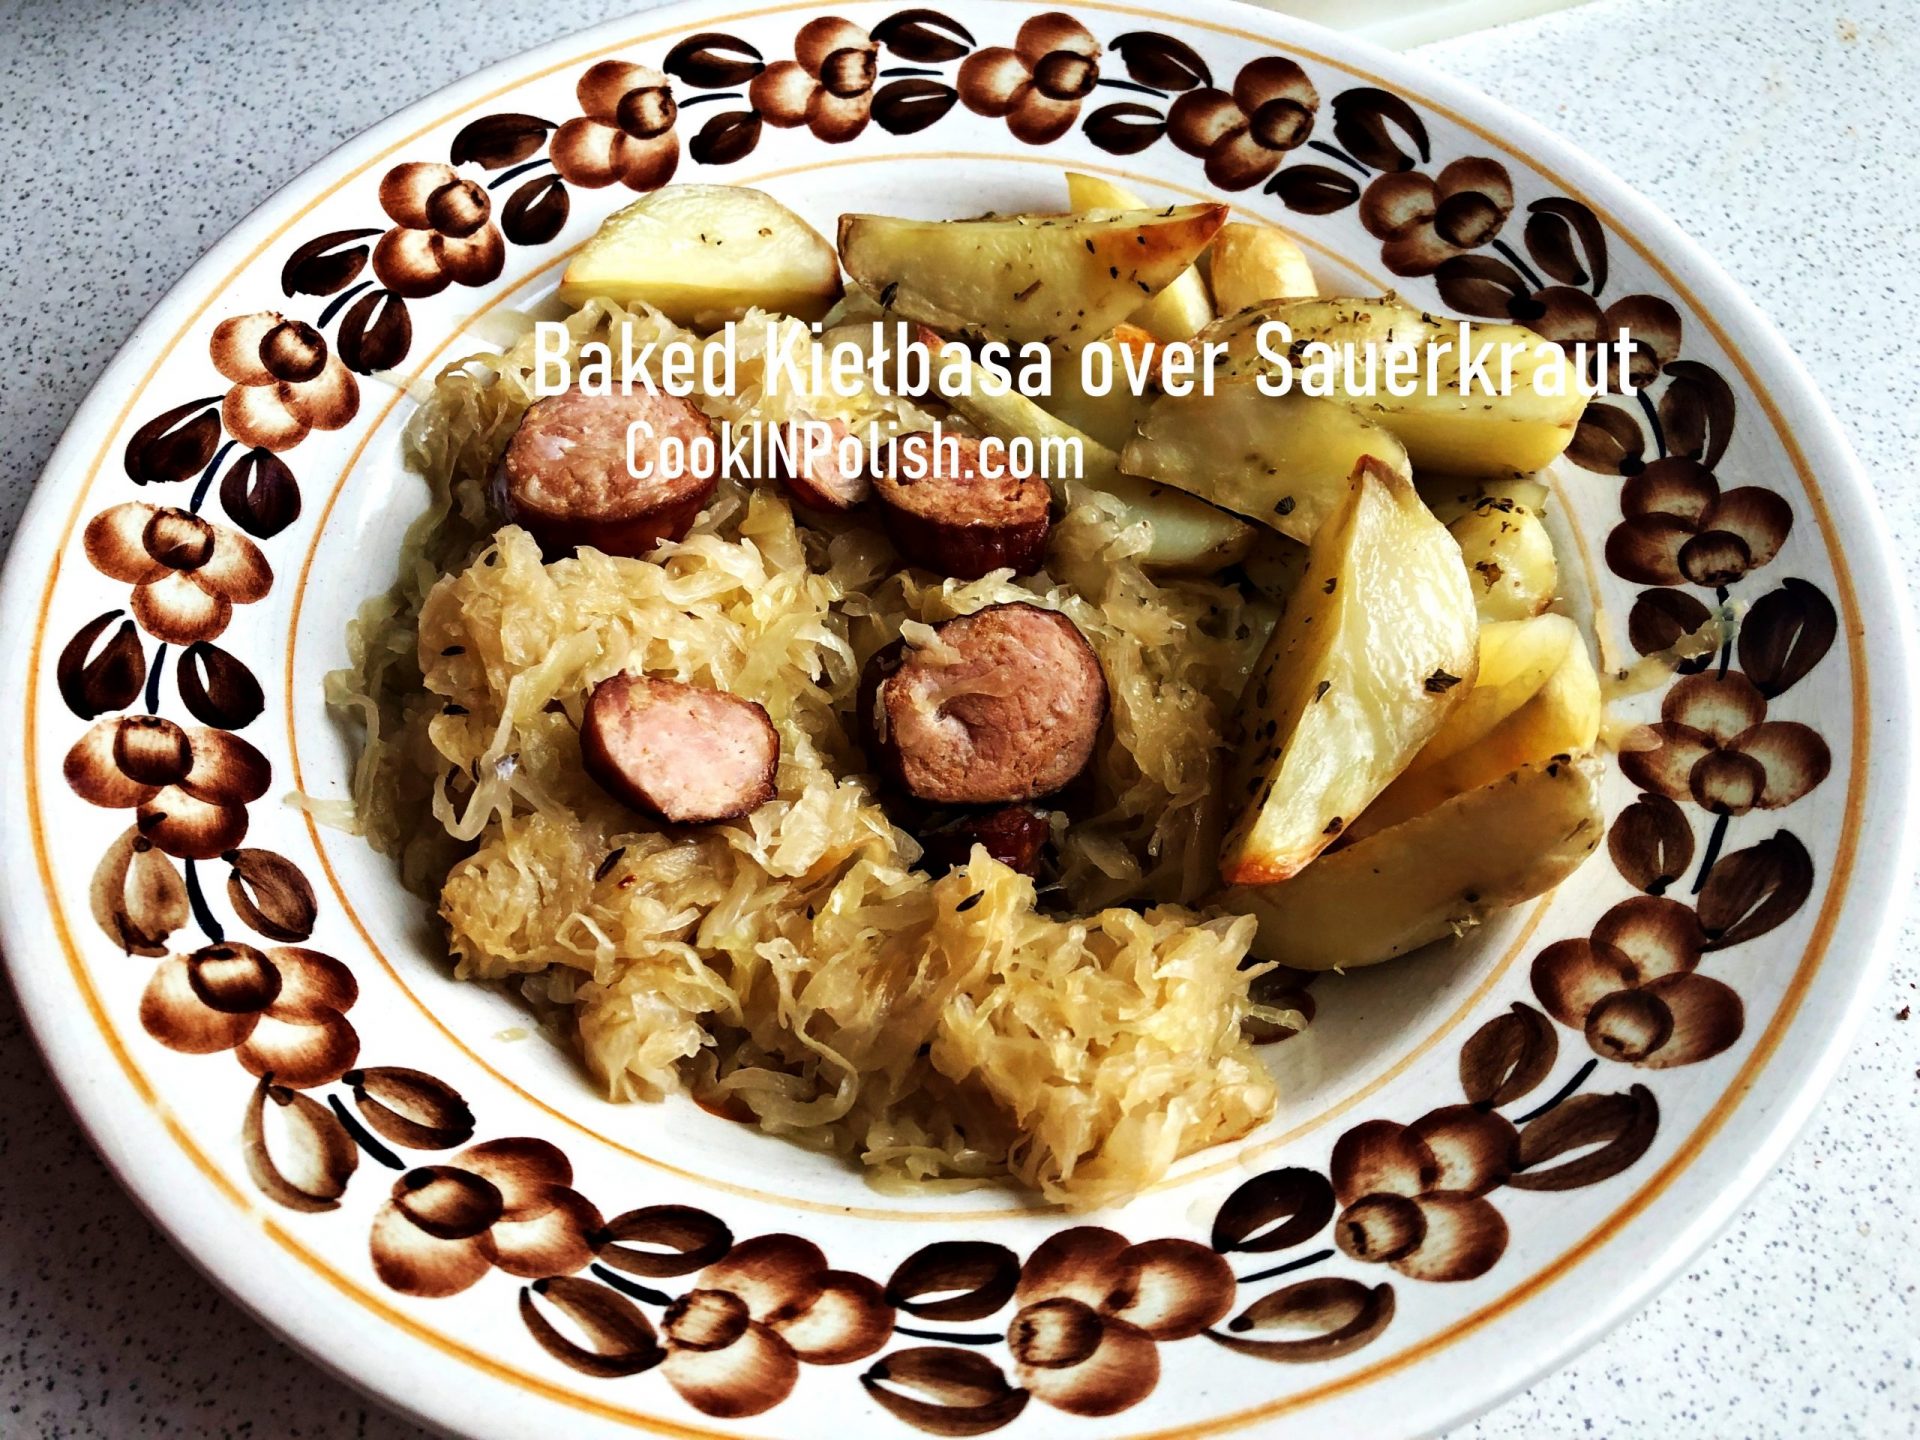 Polish Oven Roasted Sausage and Sauerkraut